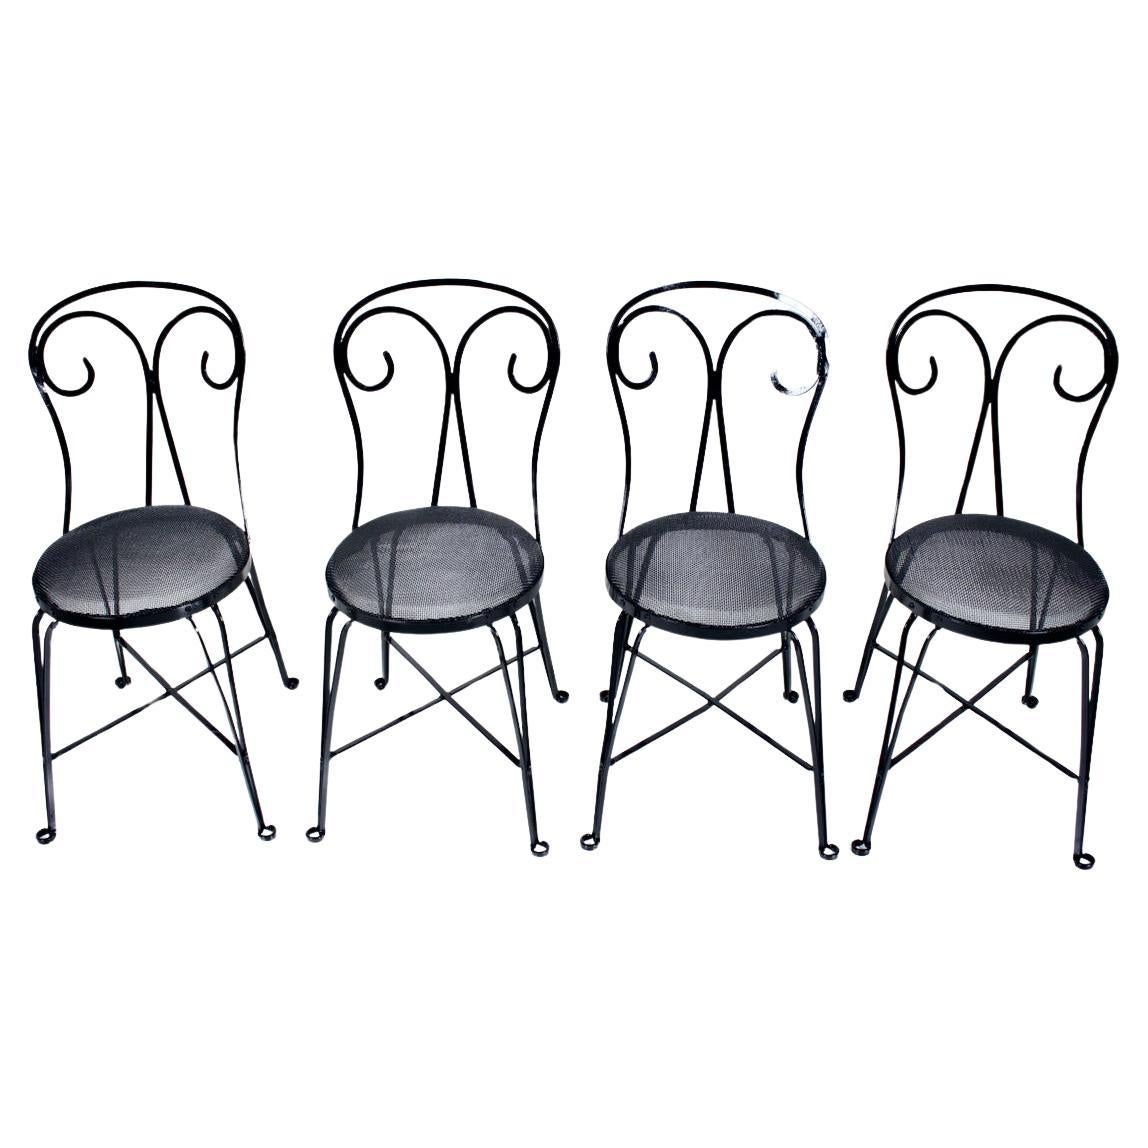 Set of 4 Black Enamel Wrought Iron Spring Wire Seat Garden Chairs, 1940s